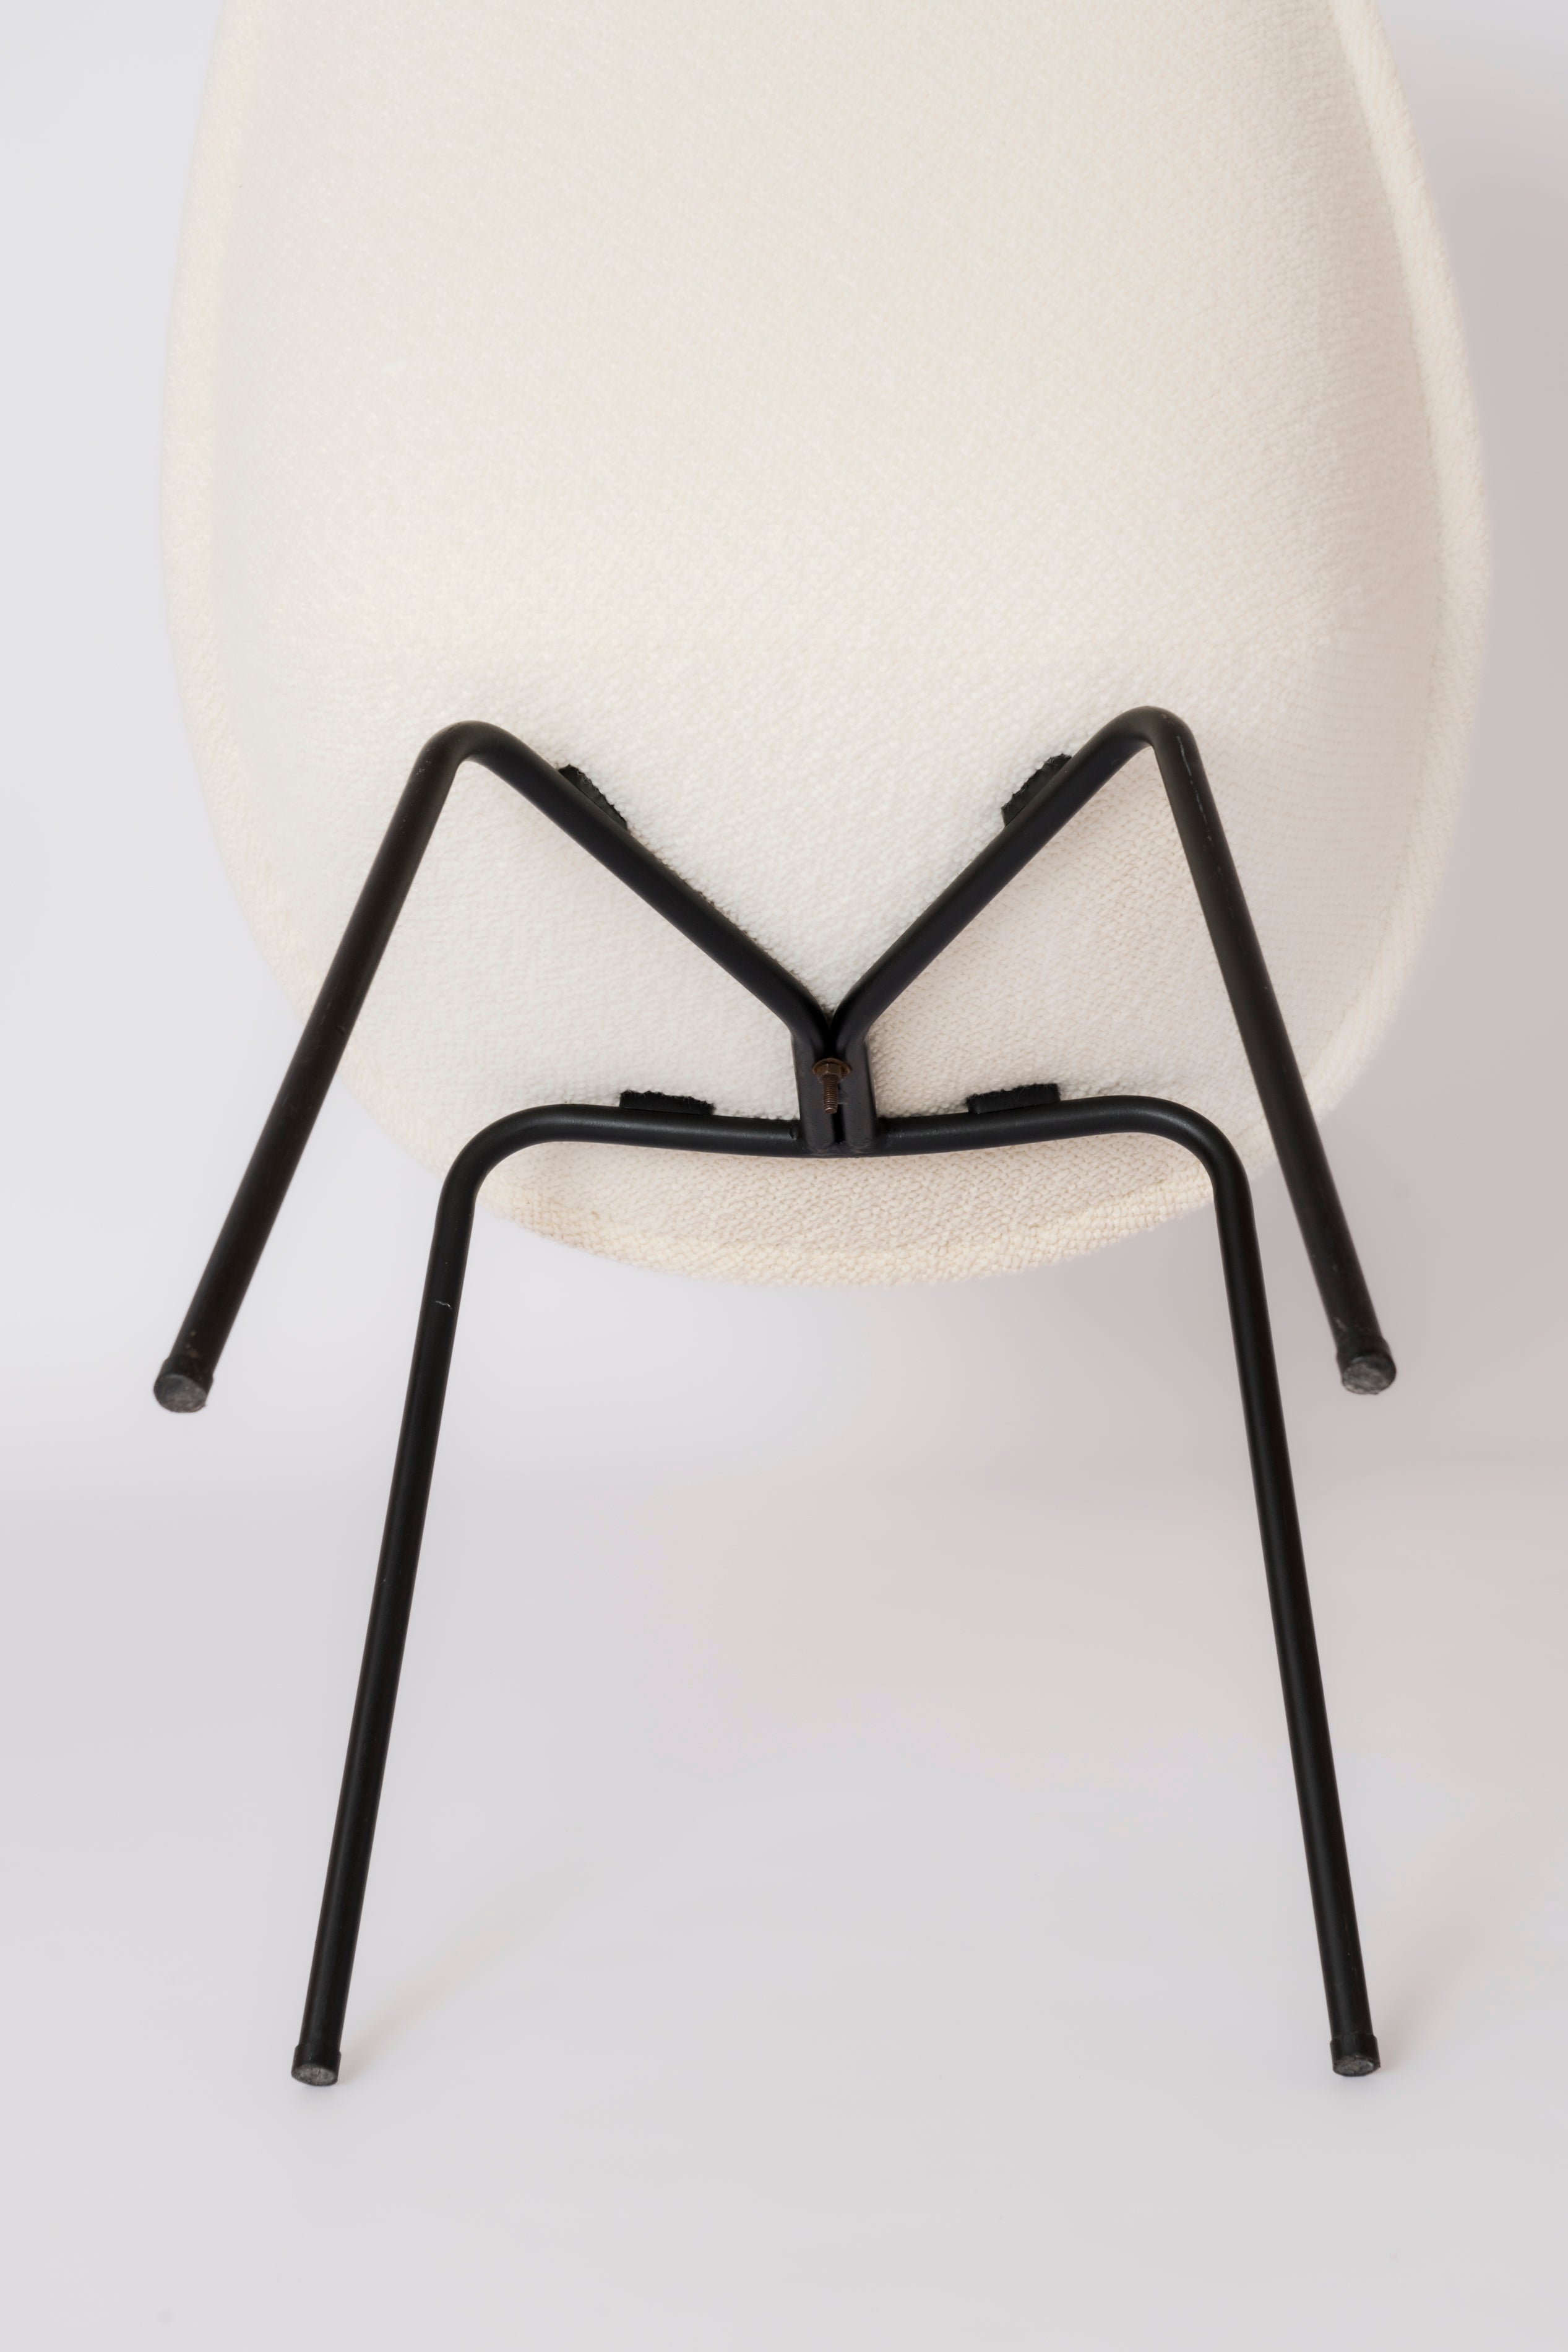 Black Enamel Steel & Lelievre Off White Boucle Chair by Dangles & Defrance